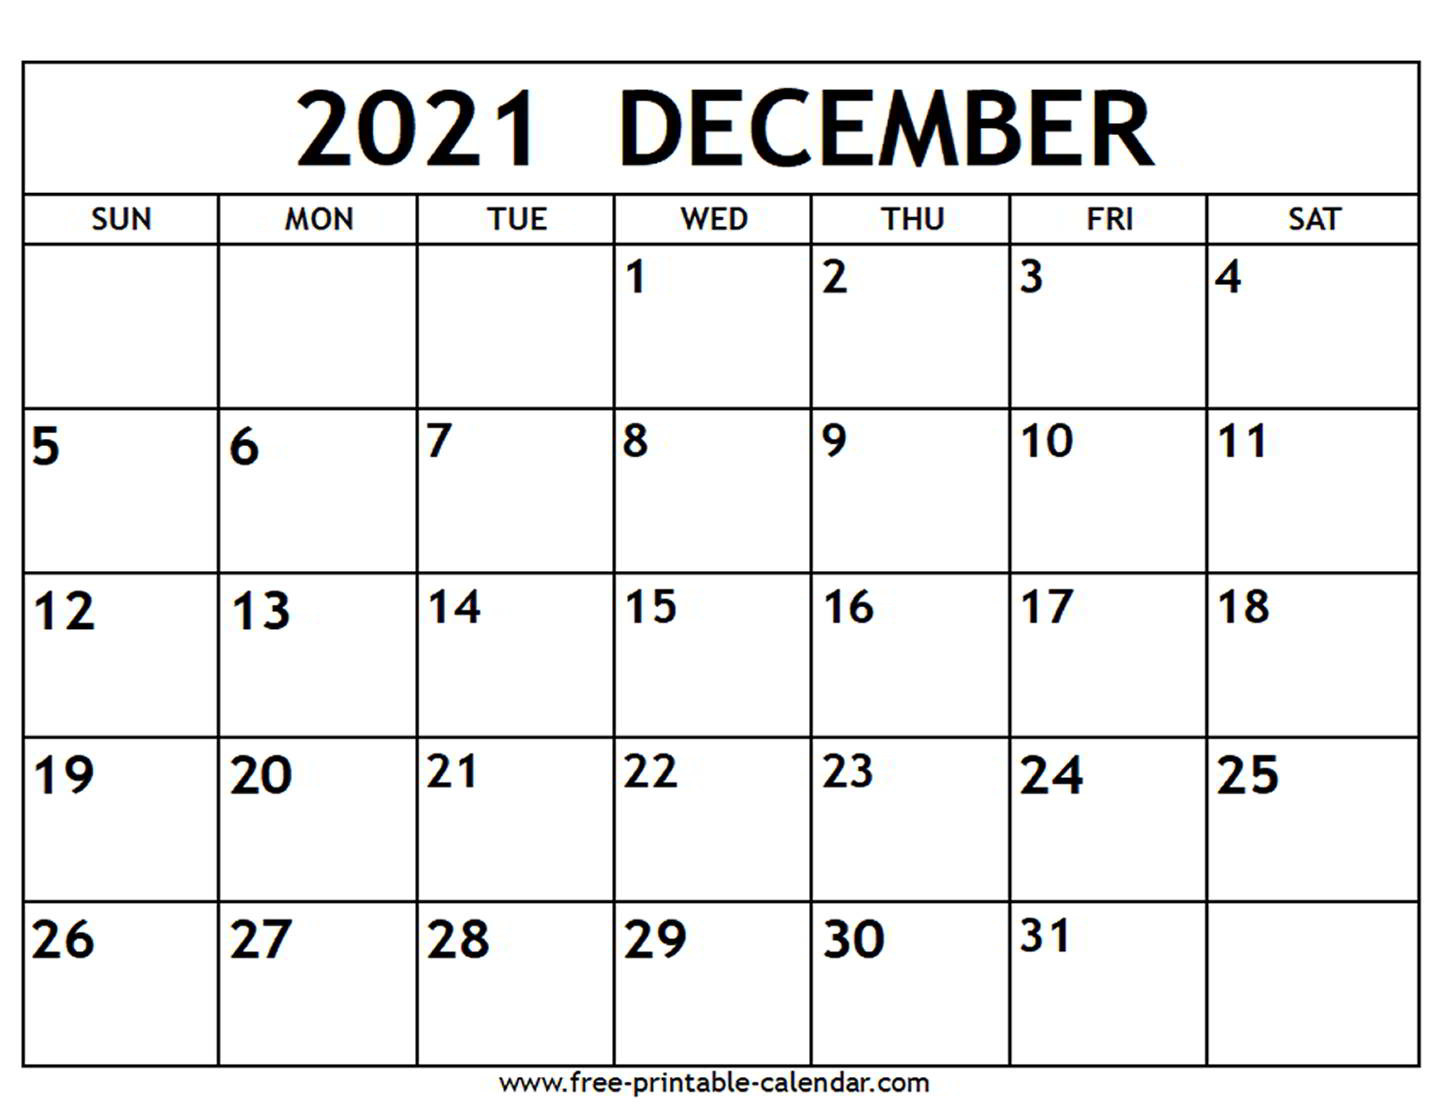 2021 Calendar Templates Editable By Word - 2021 Calendar-2021 Calendar Printable Template